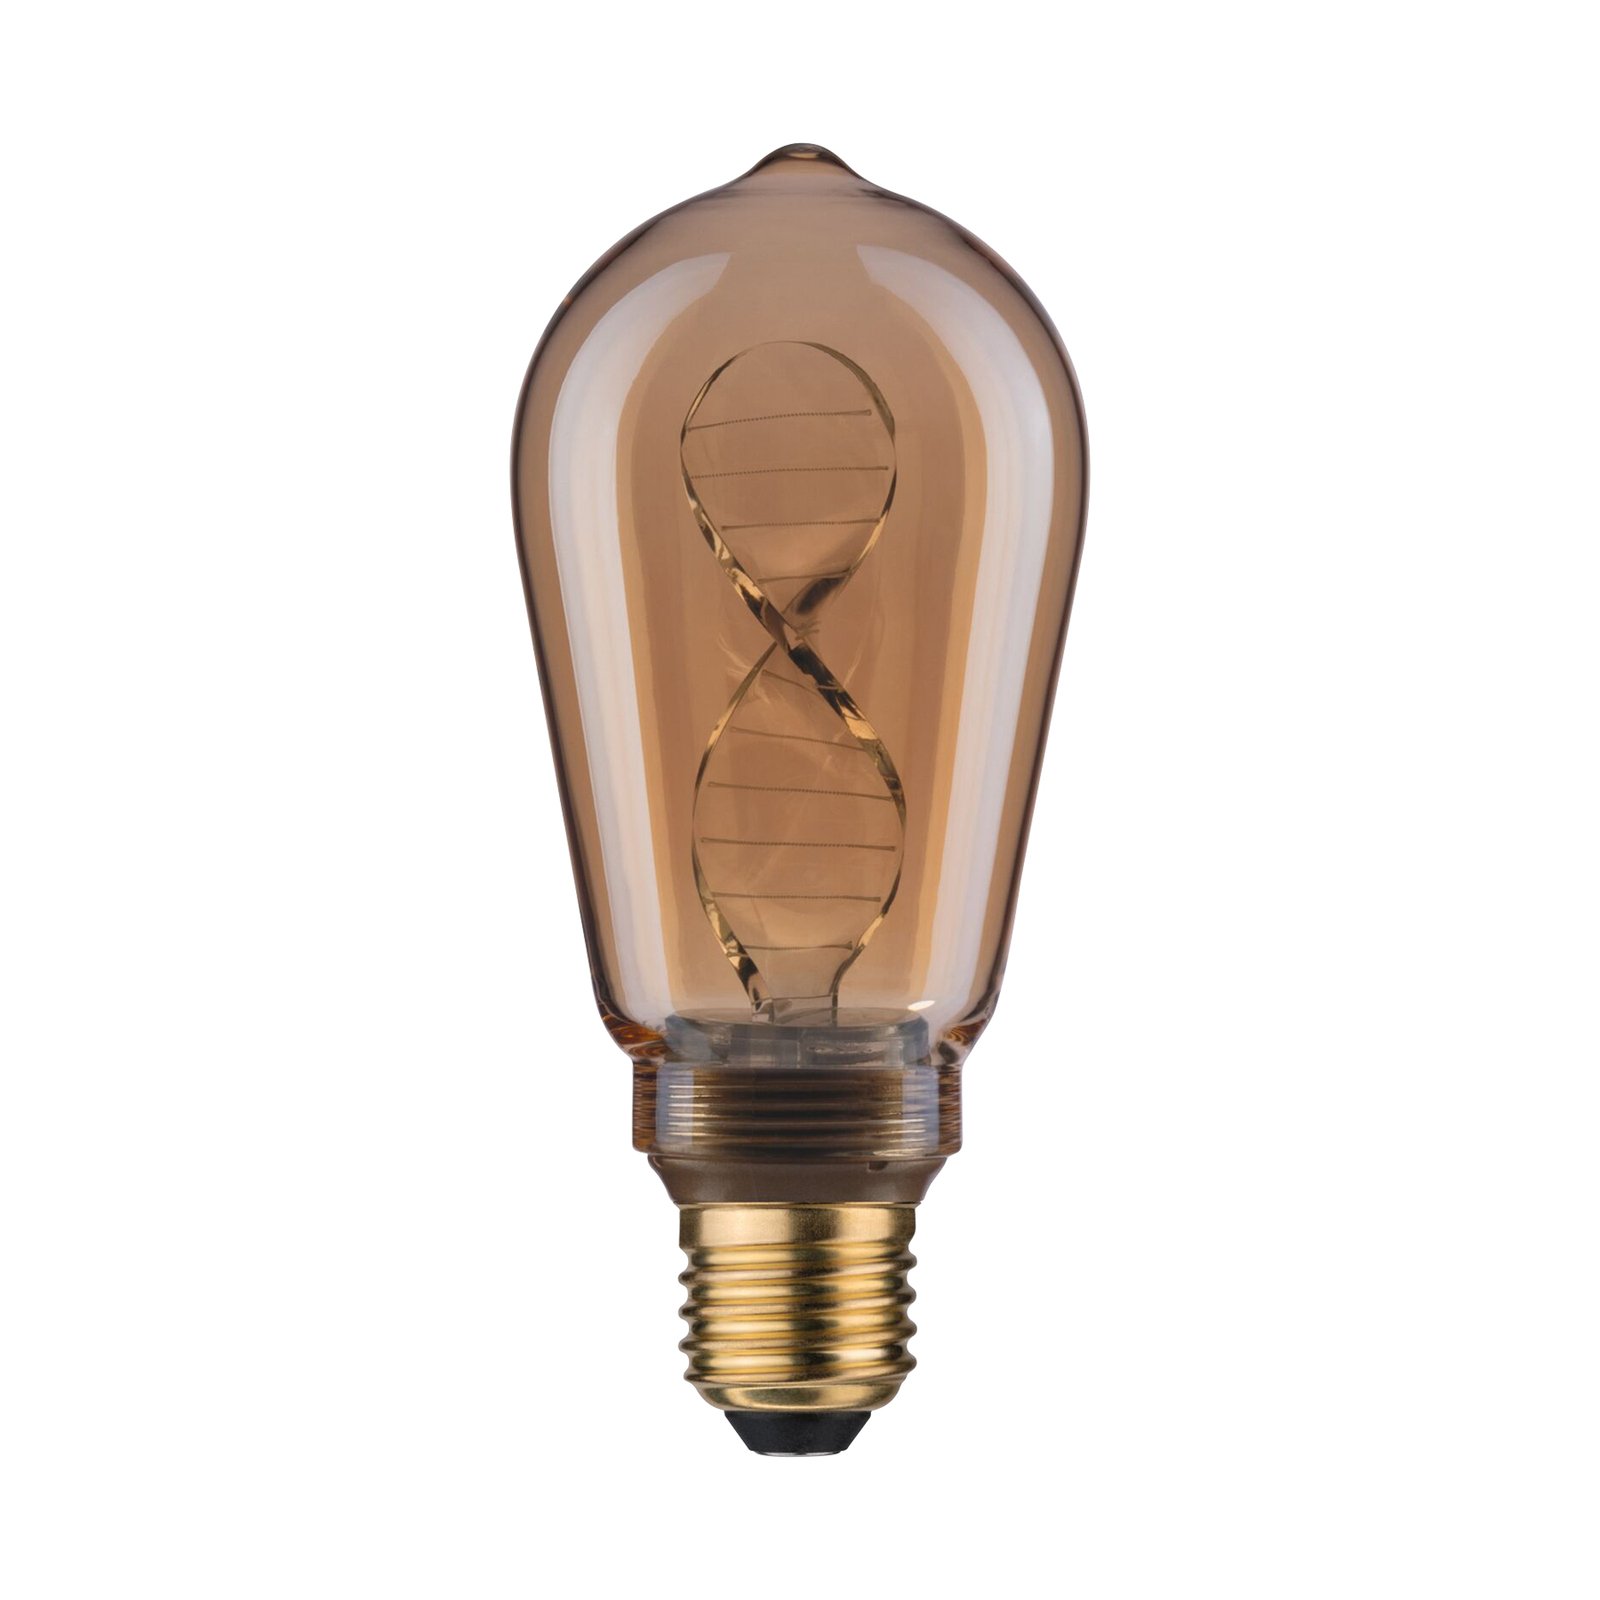 Paulmann LED bulb E27 3.5W Helix 1,800K ST64 gold